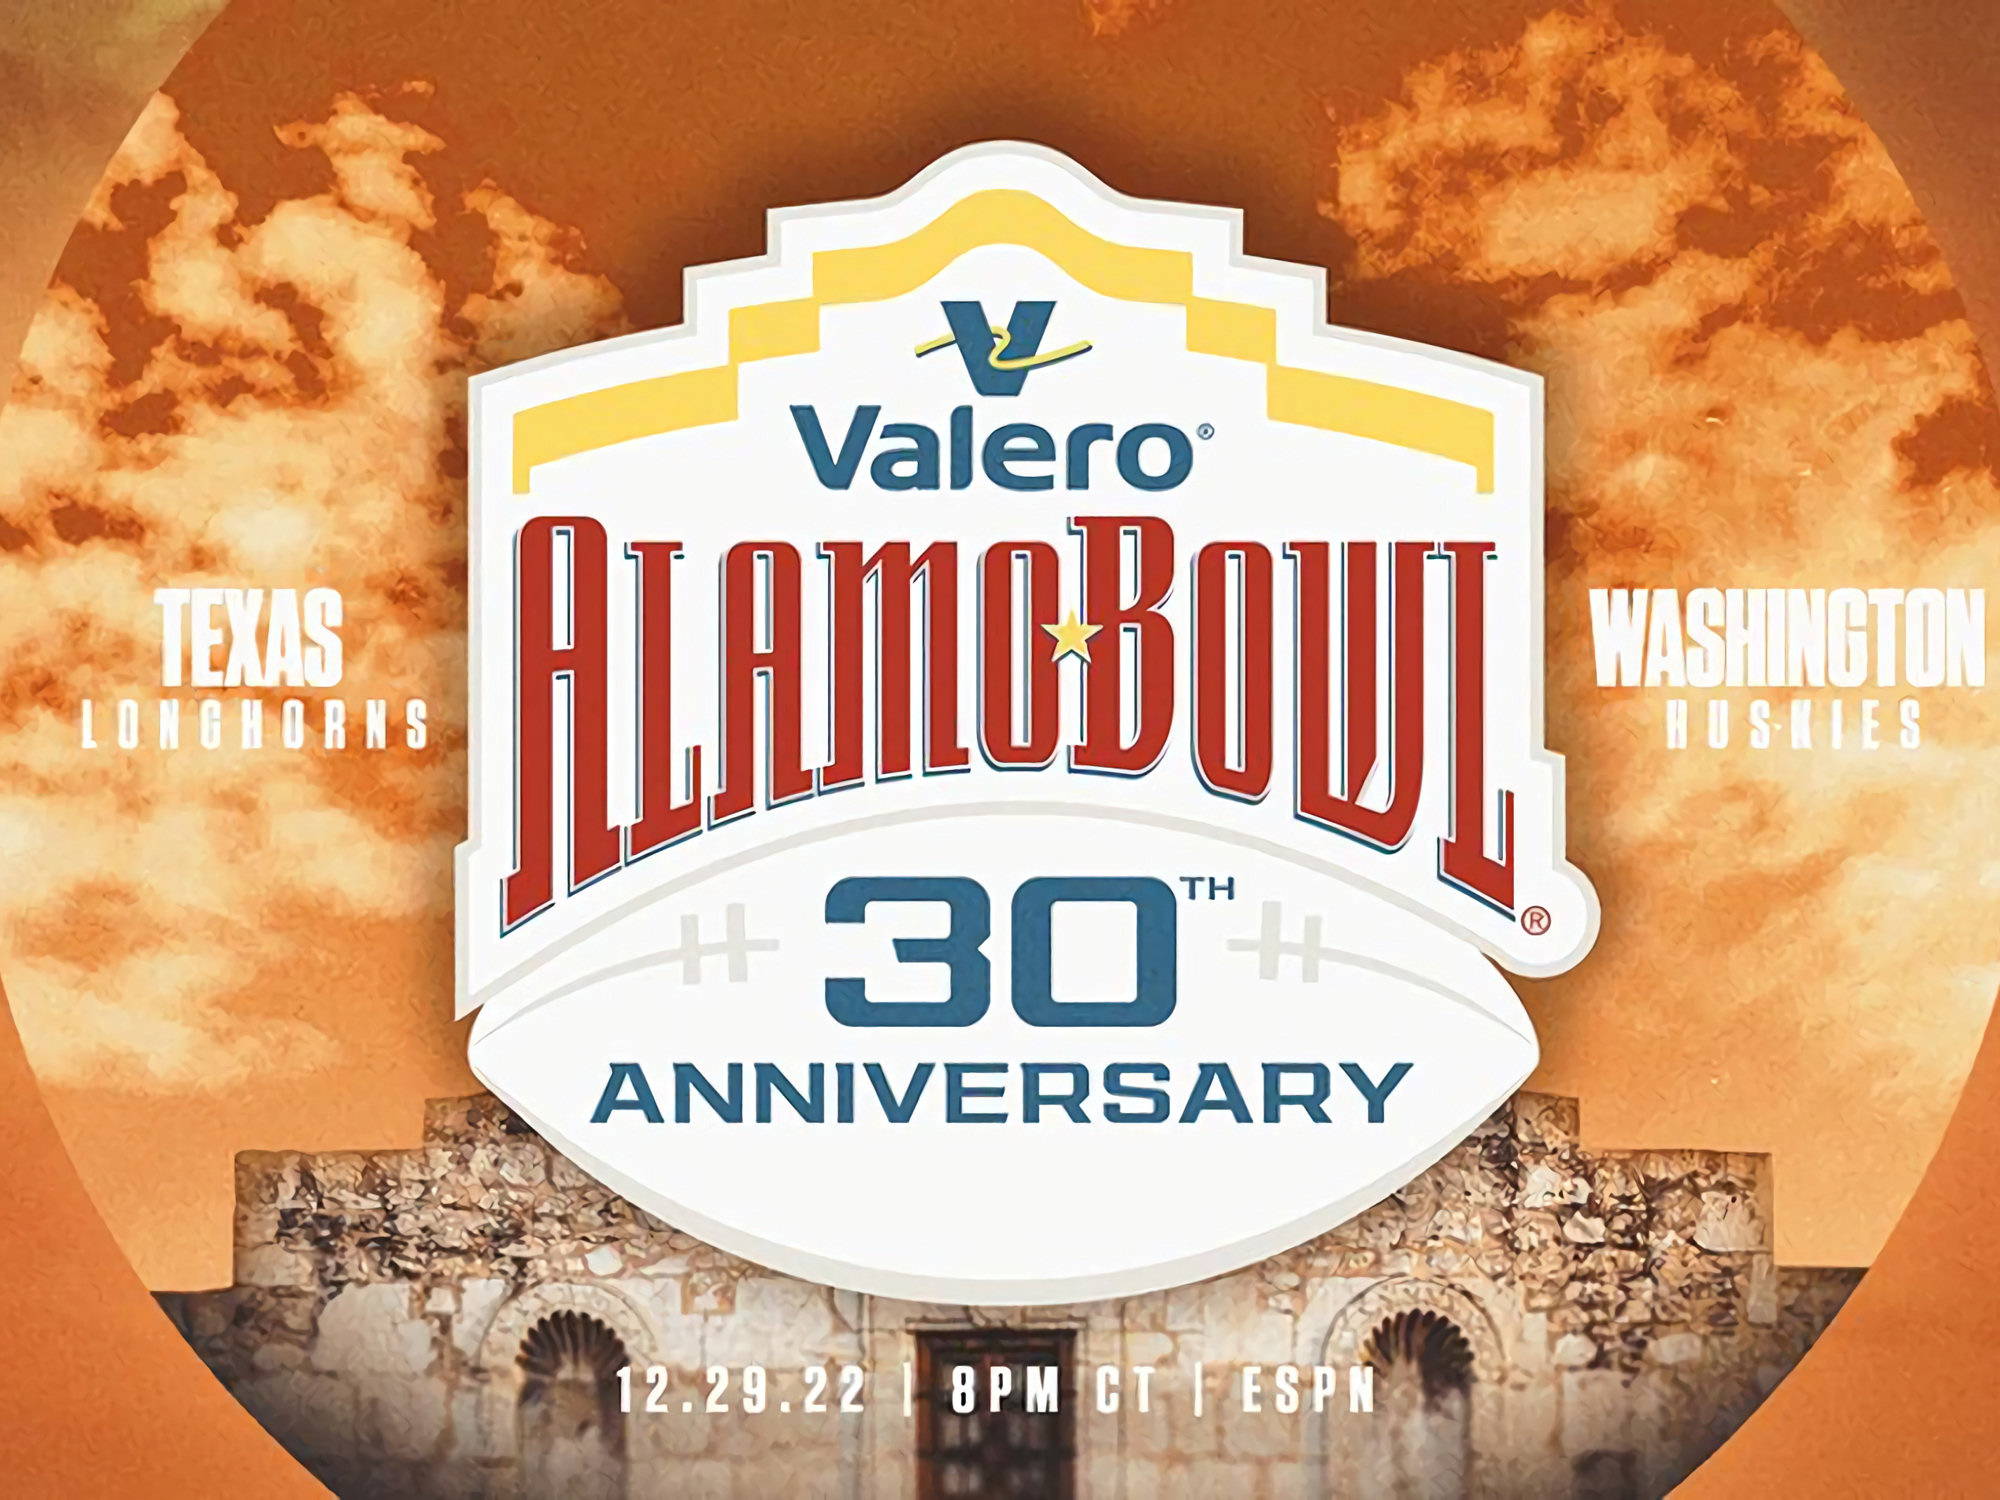 Texas Football Watching Party – Alamo Bowl Washing vs Texas